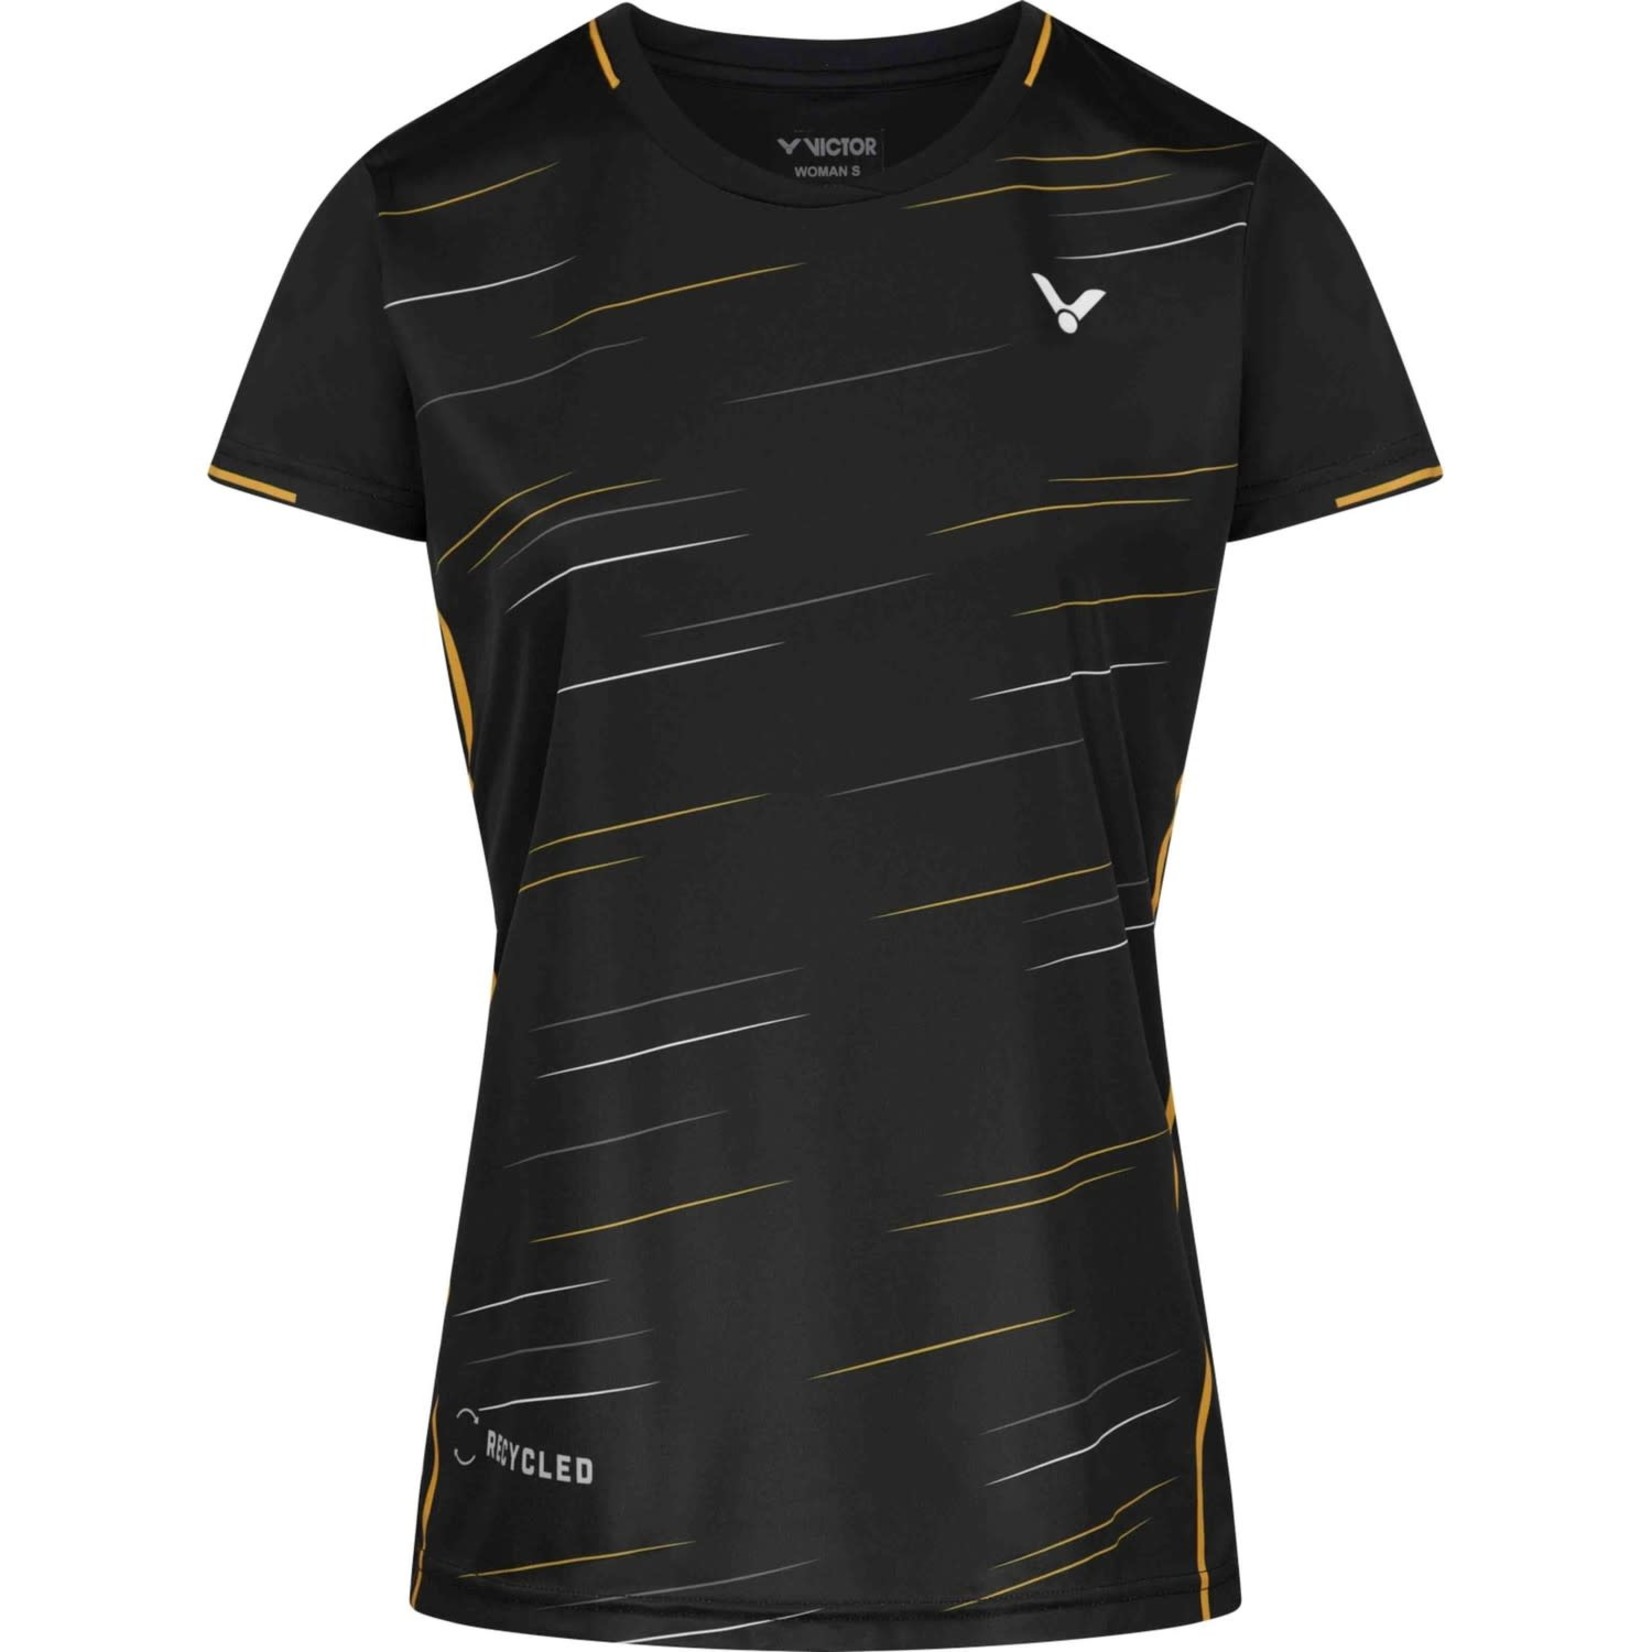 Victor Victor shirt T-24100 C